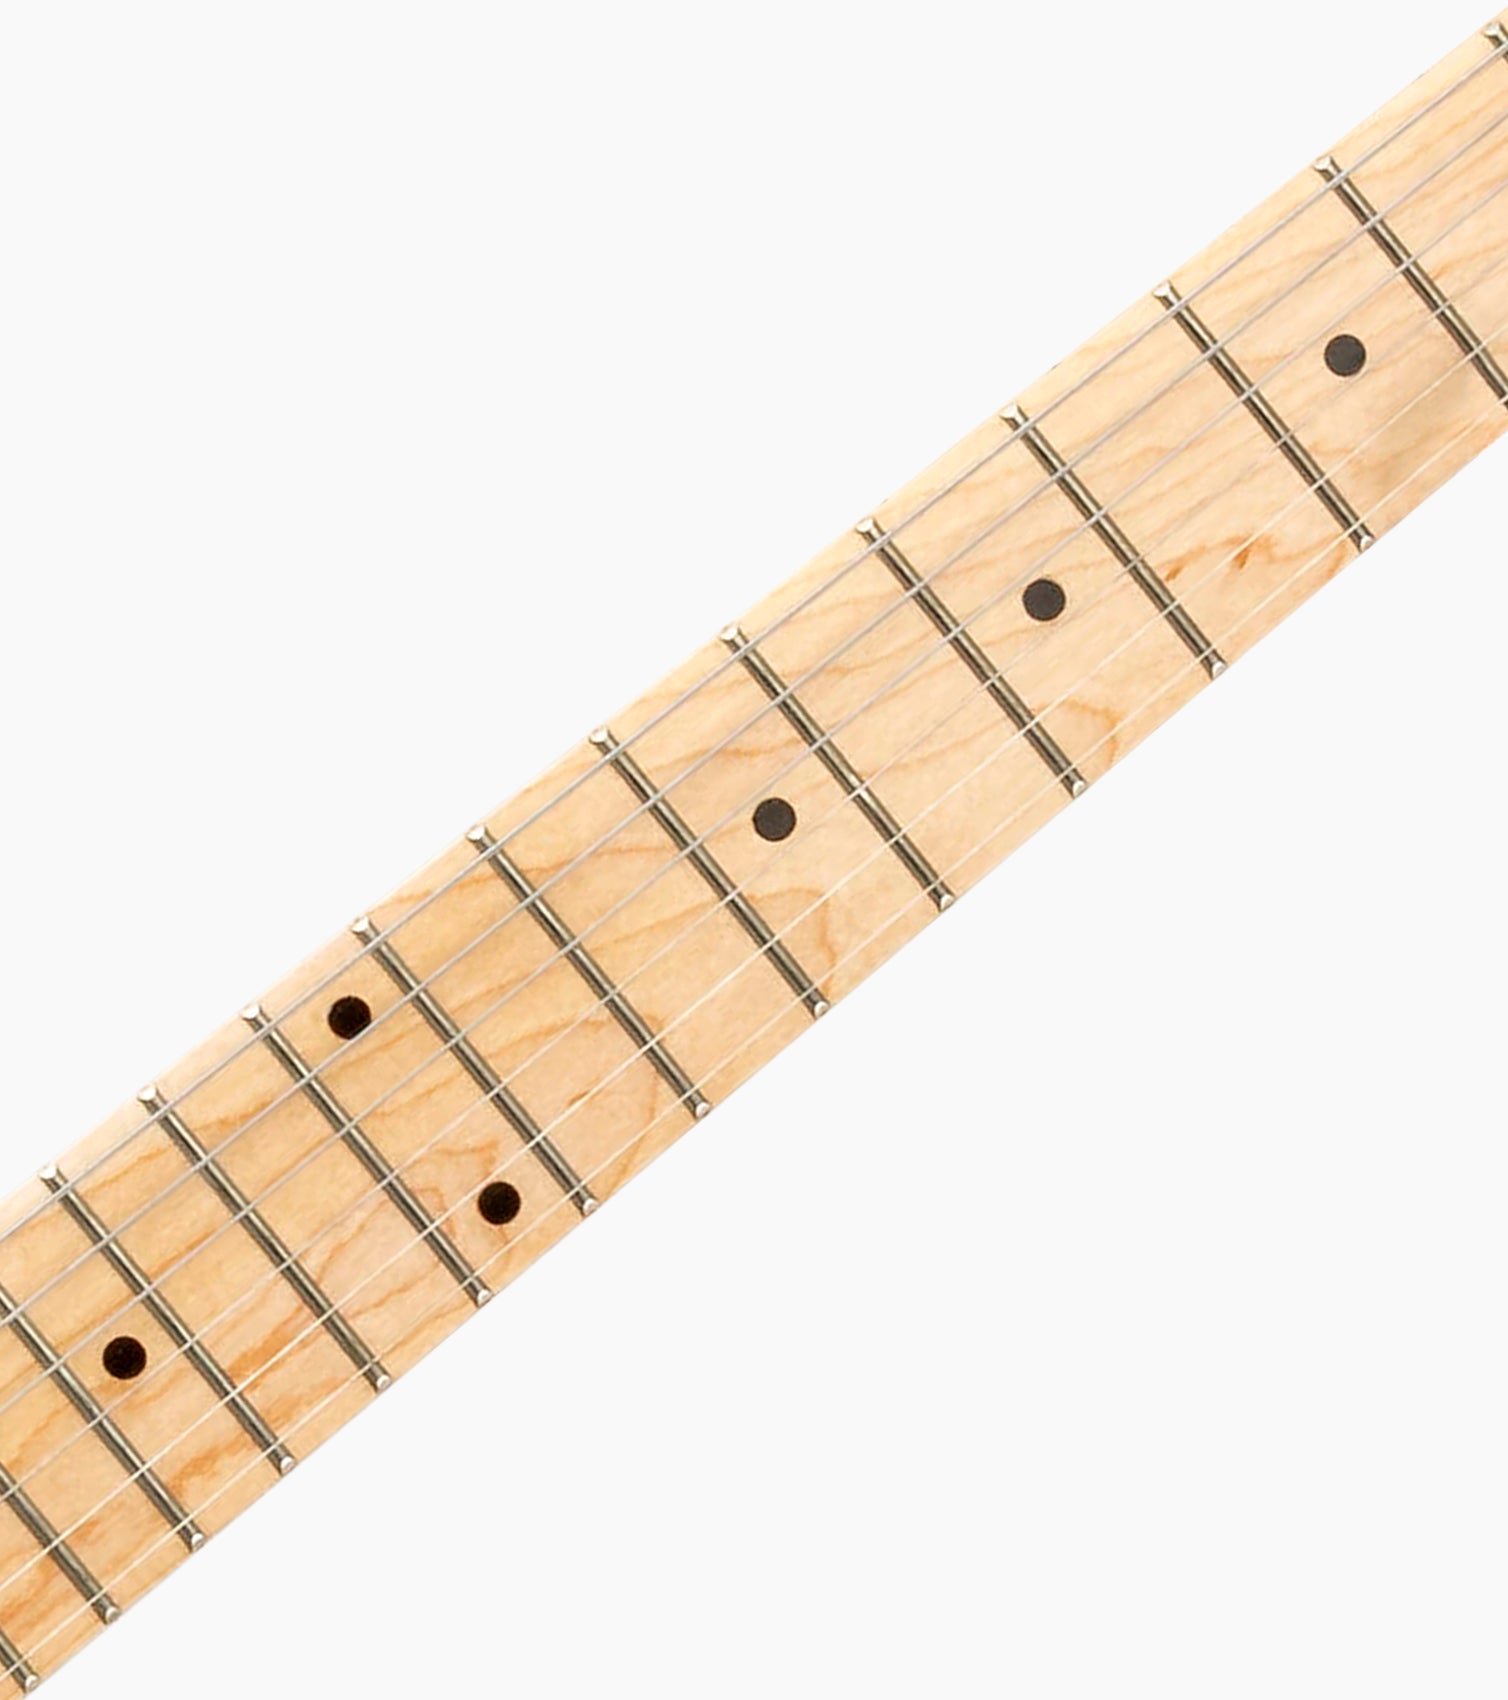 close-up of Natural single-cutaway electric guitar fretboard